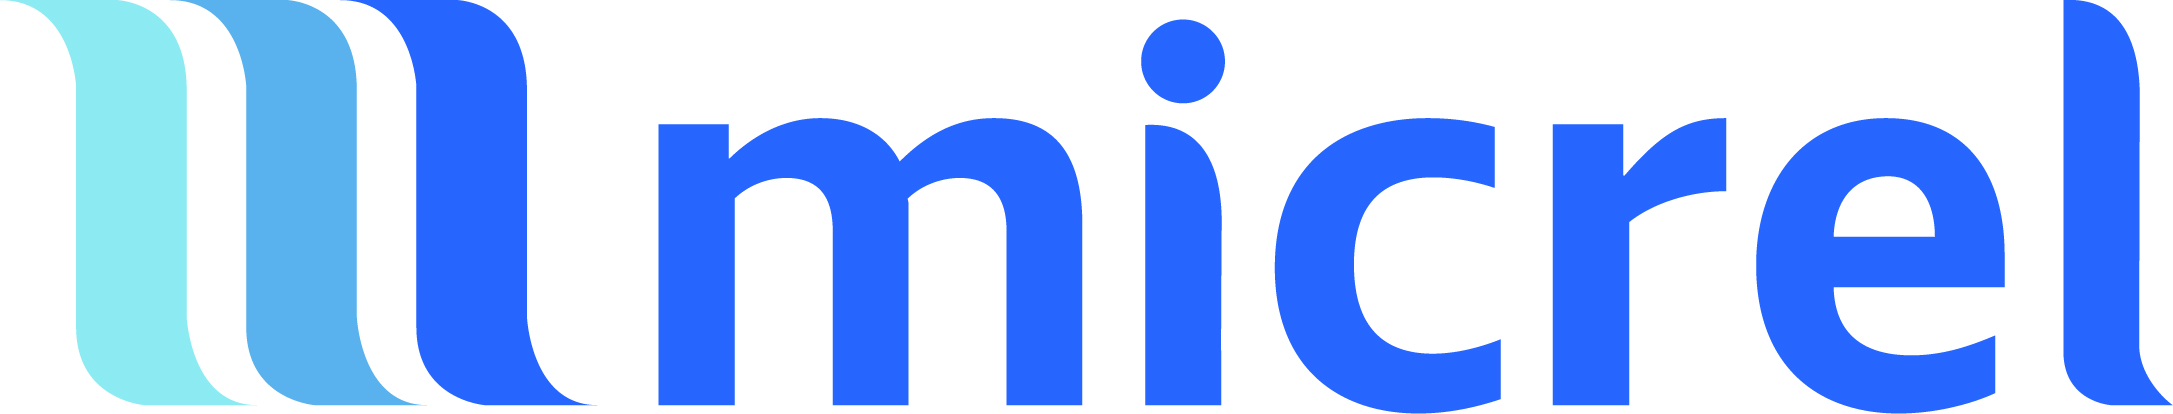 Micrel logo CMYK 002